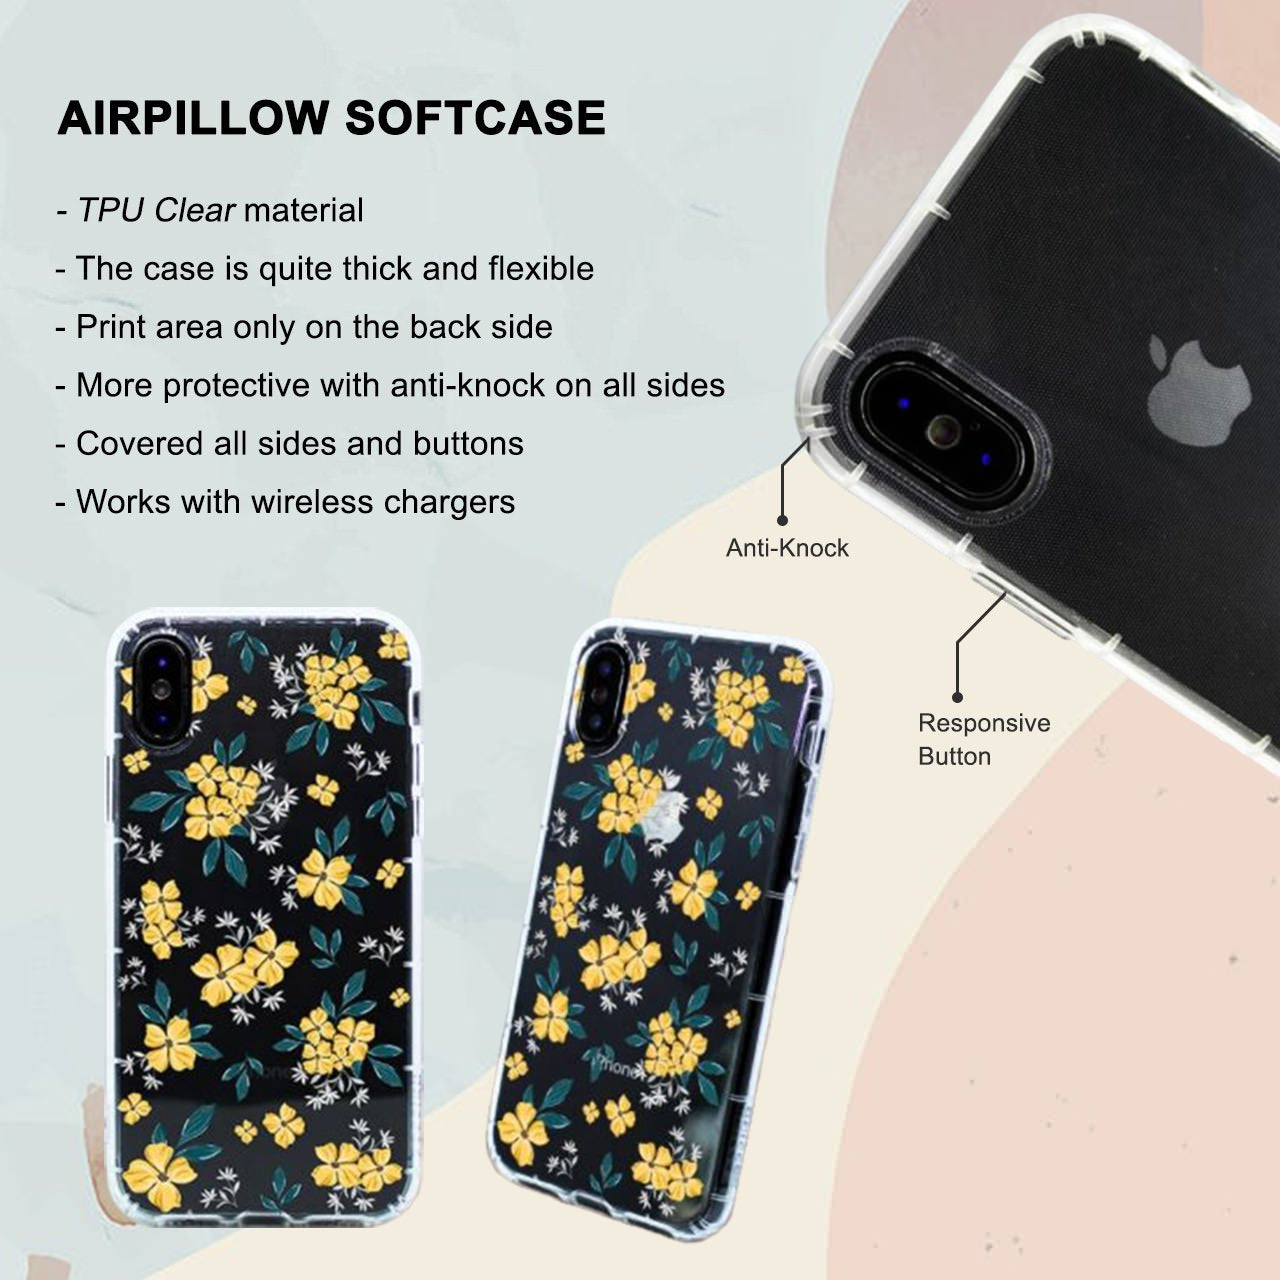 Silhouette Of Zoro In Santoryu Mode iPhone 6/6S Case